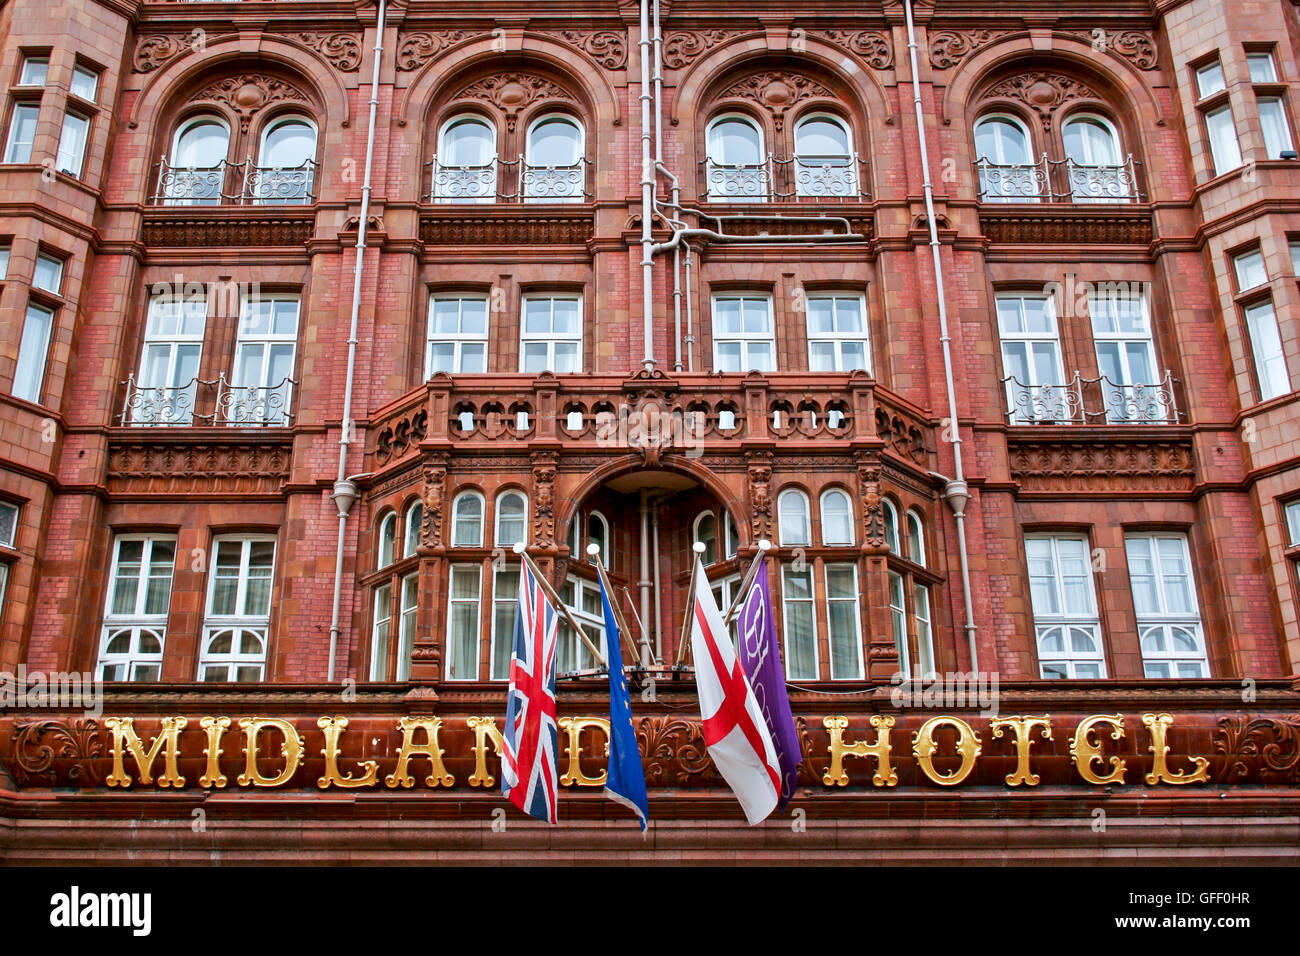 Midland Hotel, façade extérieure. Manchester City, Angleterre, Royaume-Uni, Royaume-Uni, Europe. Architecture. Style baroque édouardien Banque D'Images